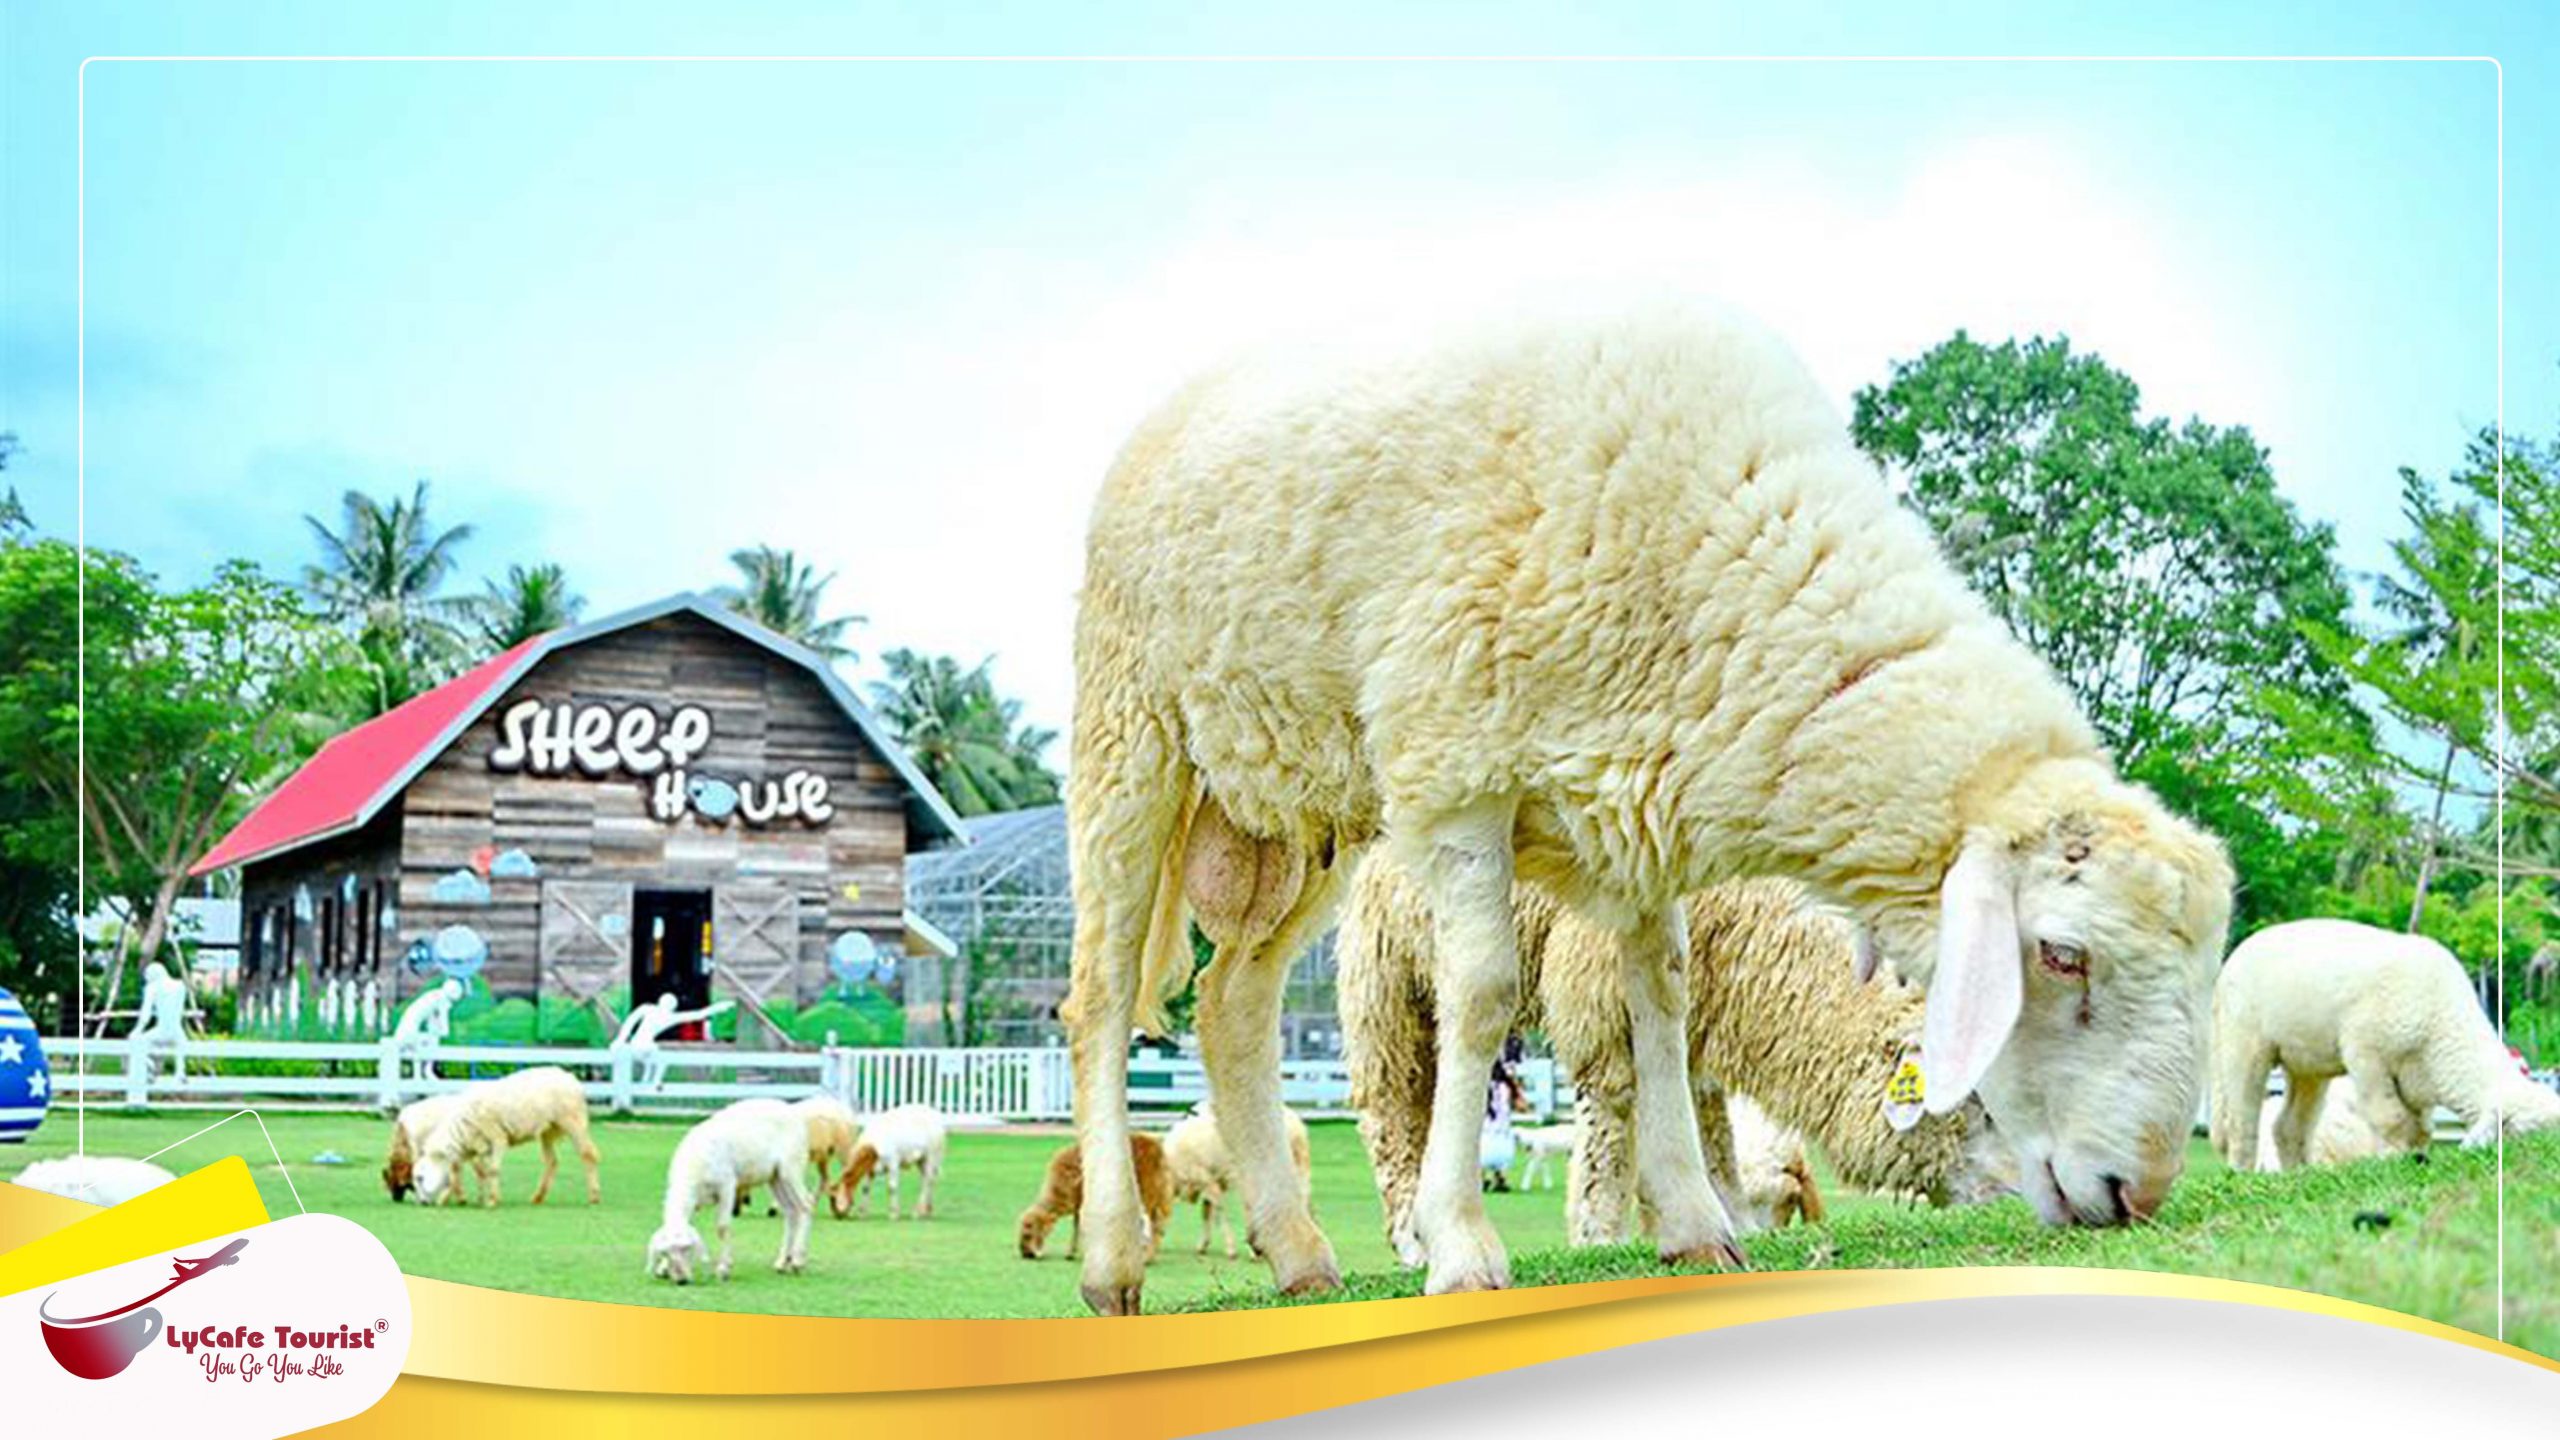  Trại cừu – Swiss Sheep Farm thái lan